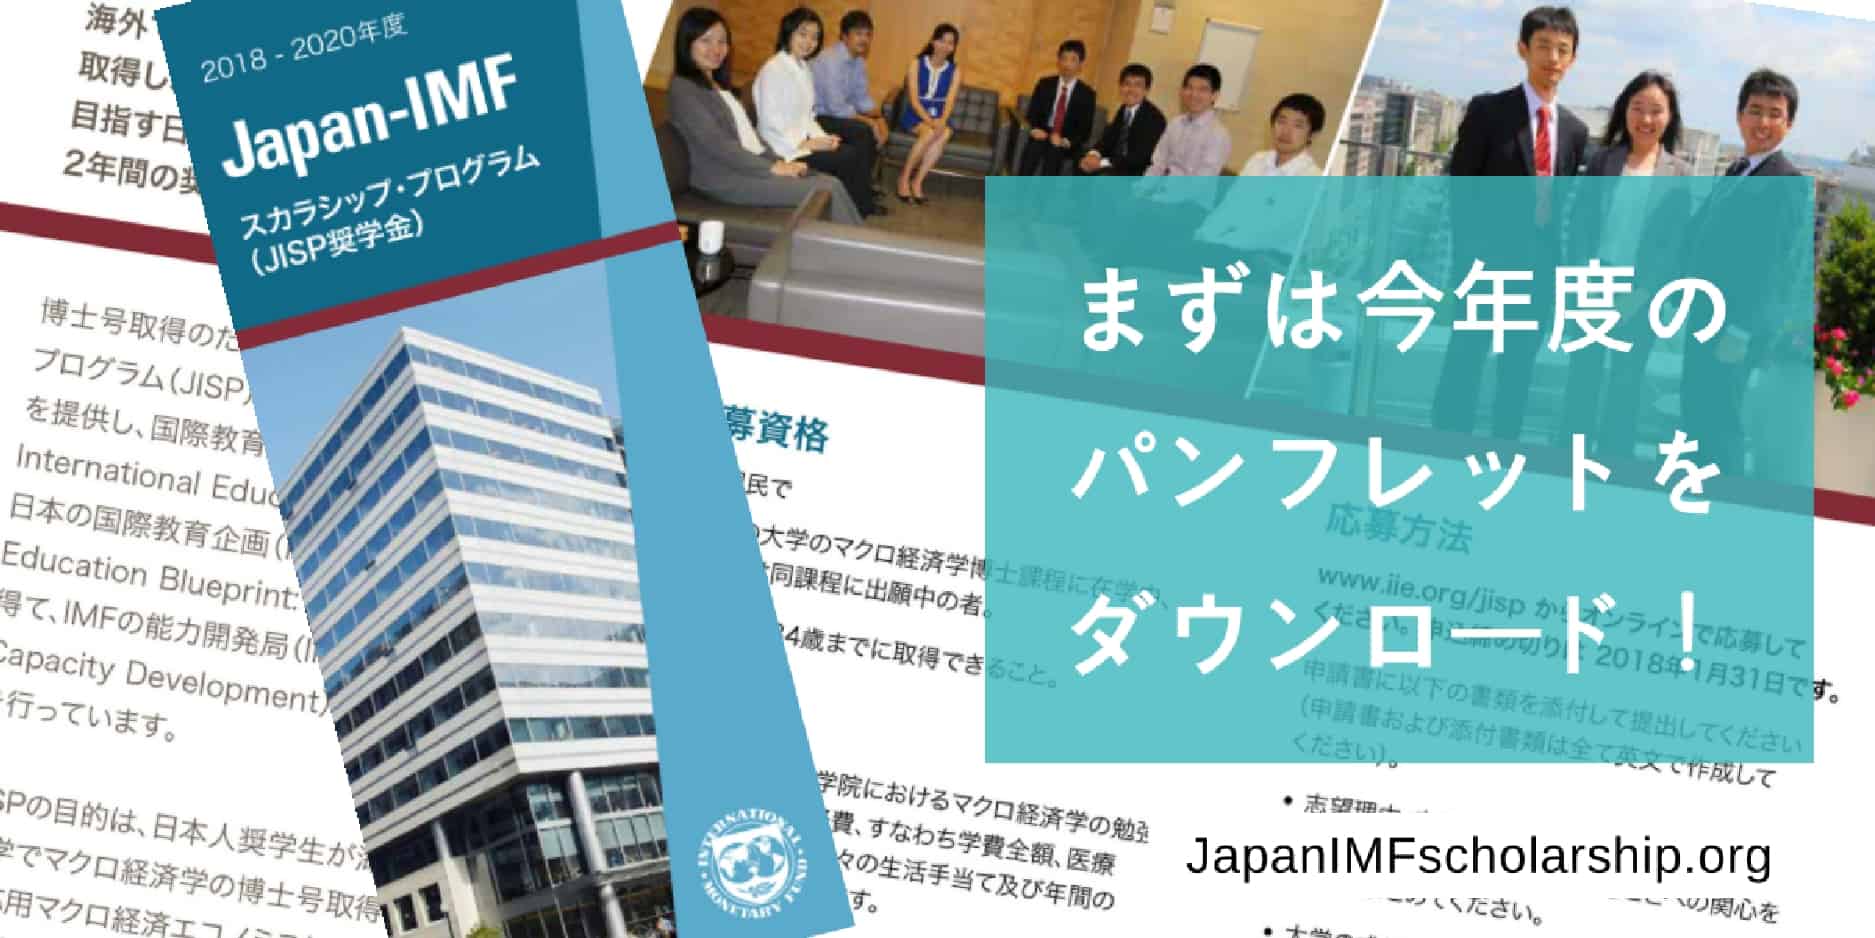 jisp 2018-2020 brochure まずはパンフレットをダウンロード | visit japanimfscholarship.org